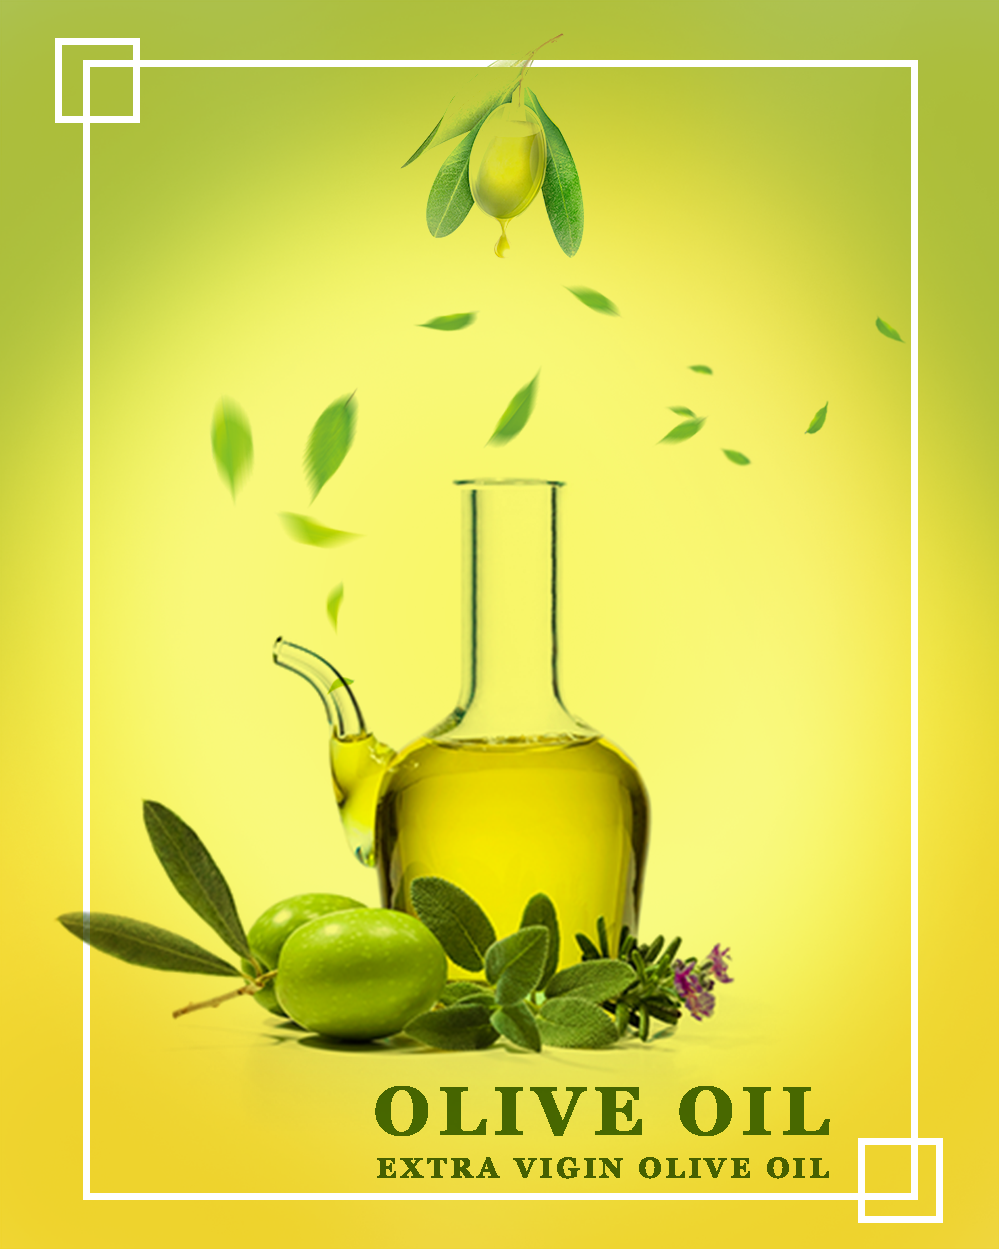 20 оливковое масло. Оливковое масло фон. Оливки креатив. Фотообои оливковое масло. Фоны 3 d для оливкового масла.